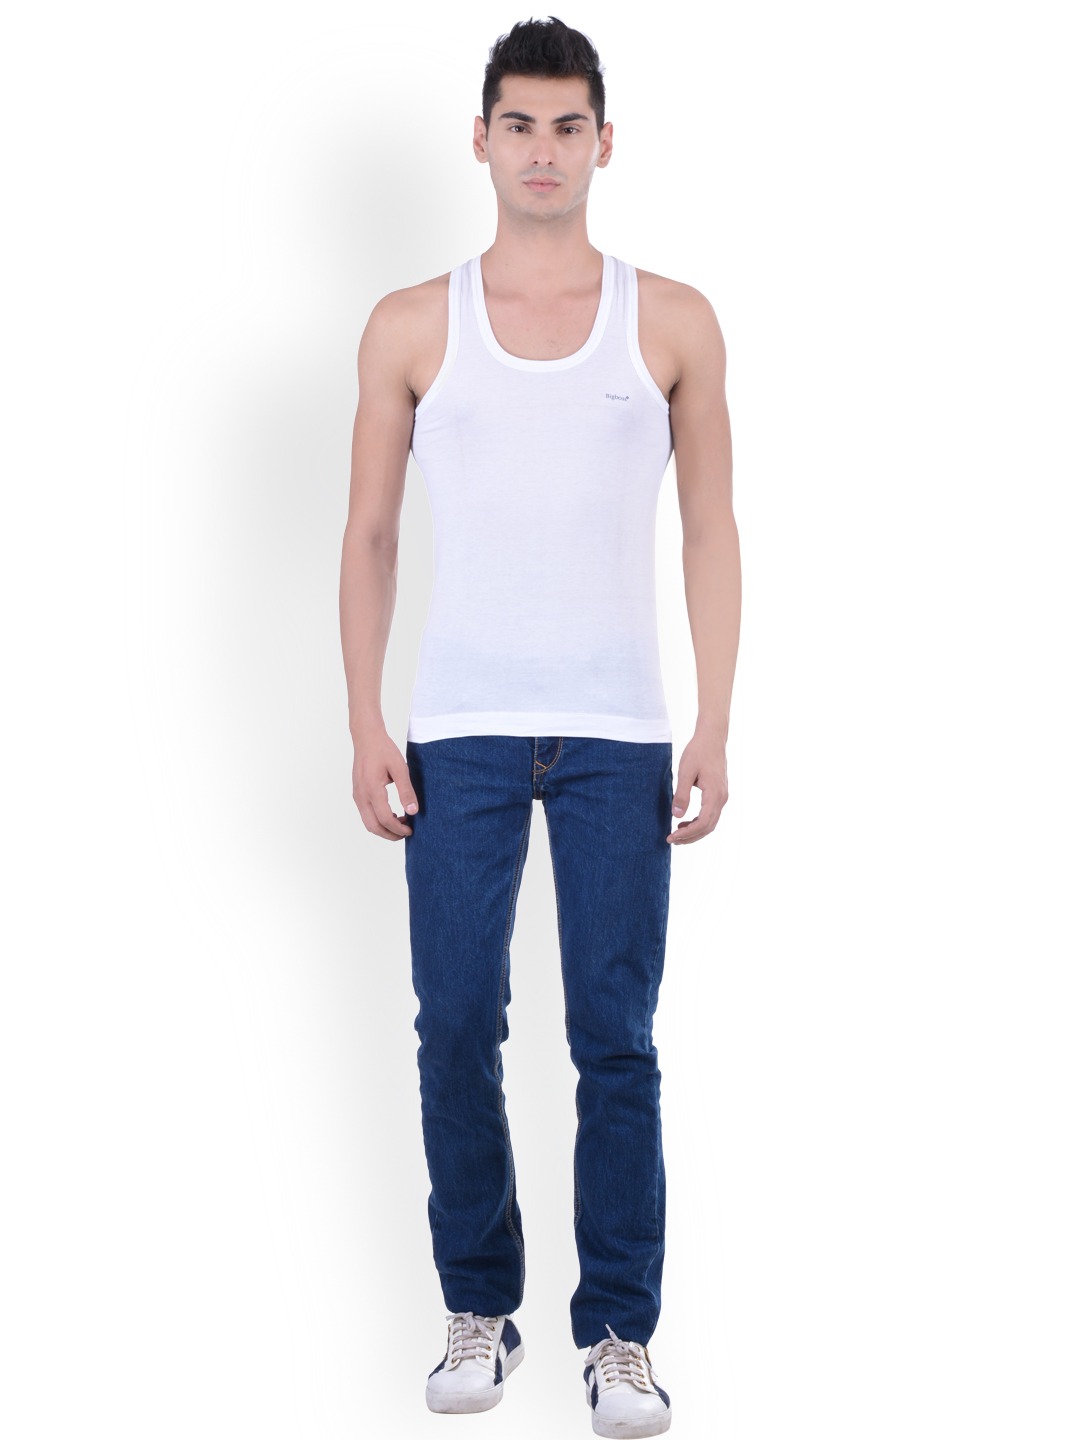 Clothing Innerwear Vests | Dollar Bigboss Pack of 6 White Innerwear Vests MDVE-01-R1-PO6 - NT70401